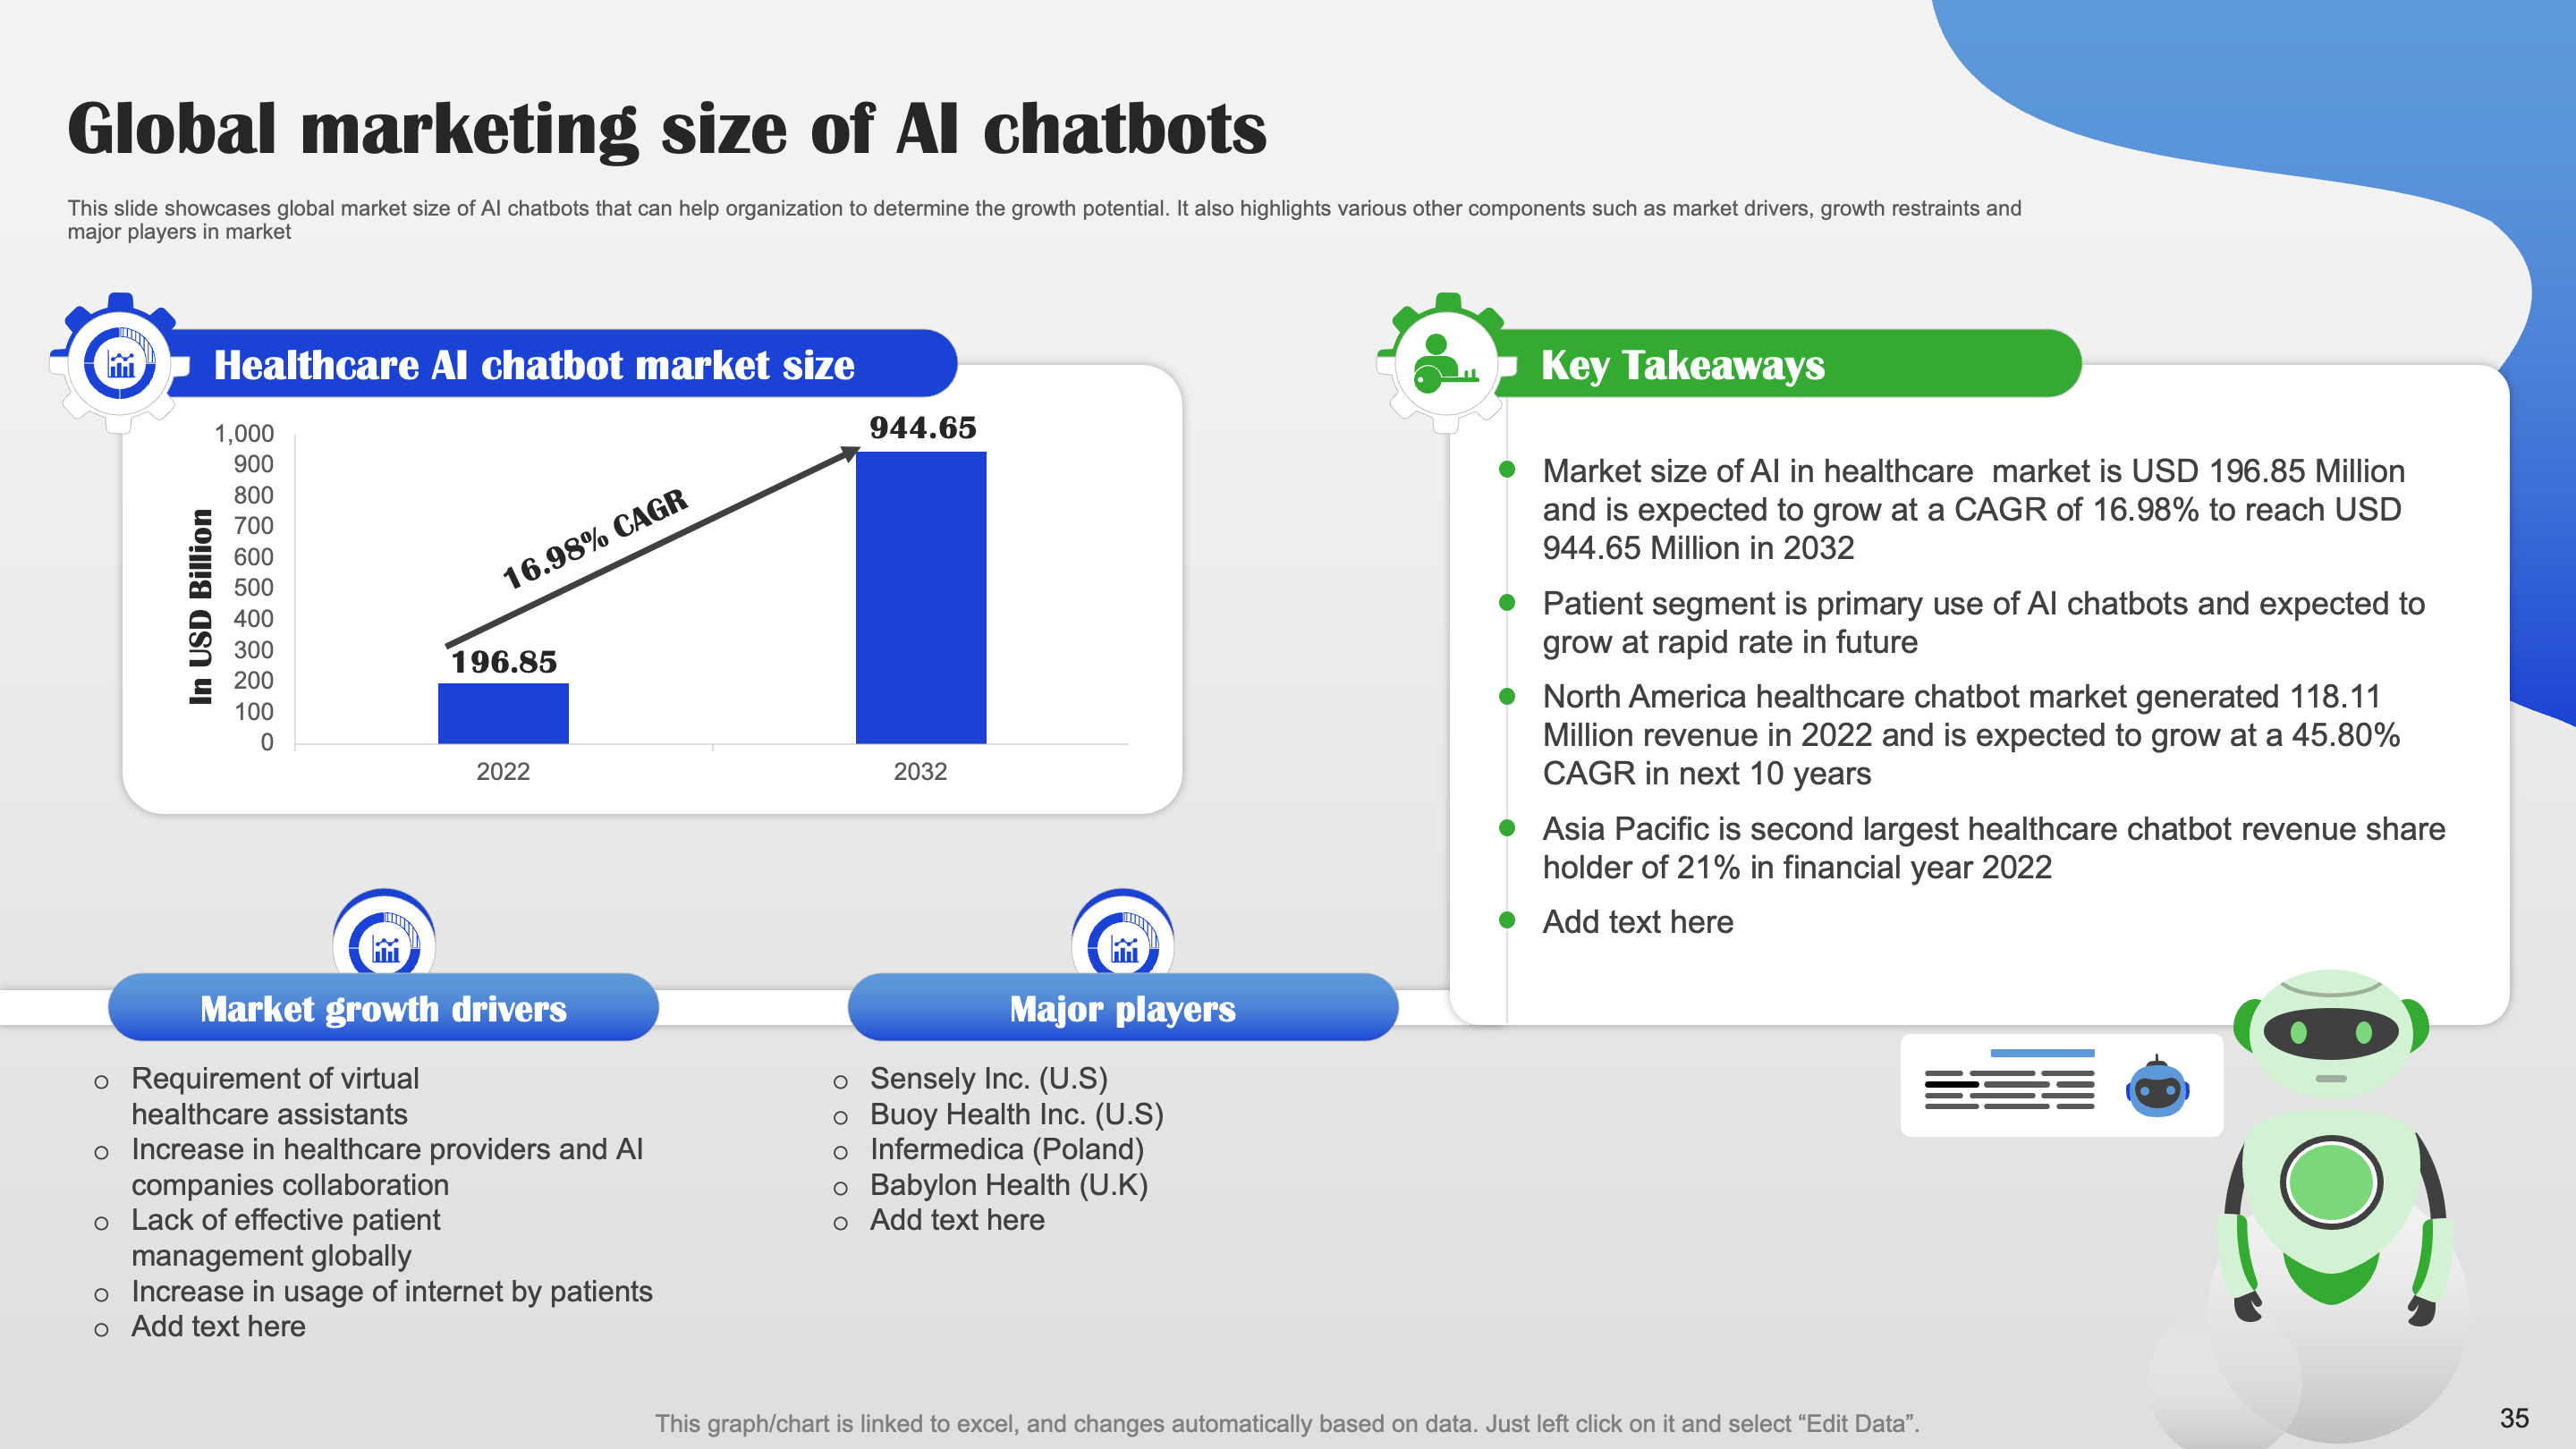 Global Marketing Size of AI Chatbots